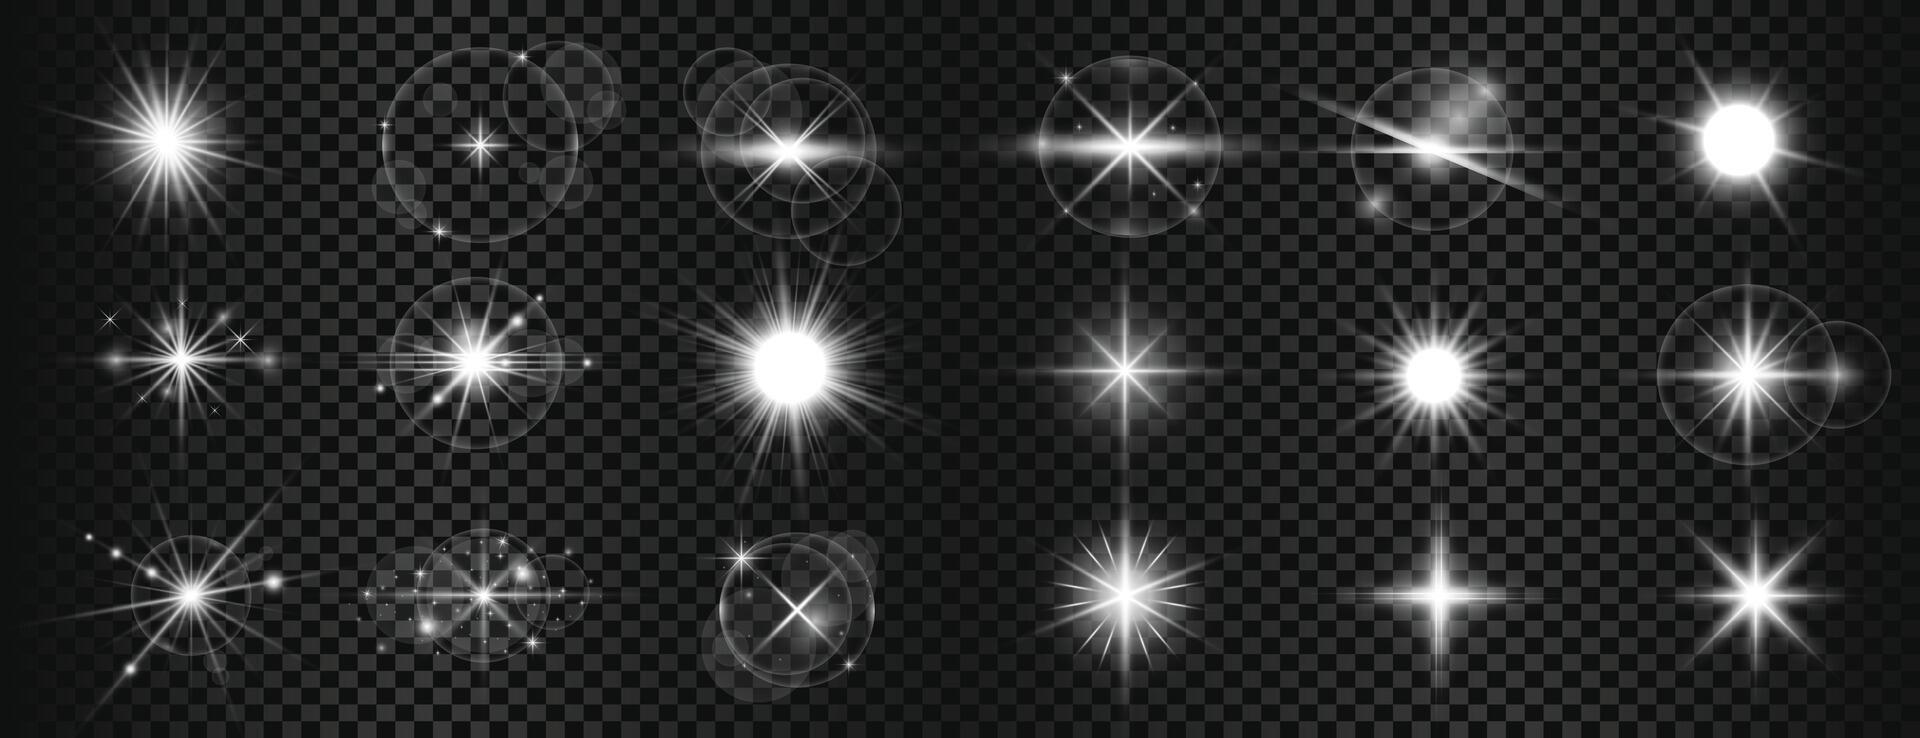 colección de transparente láser haz antecedentes en plata rayos vector